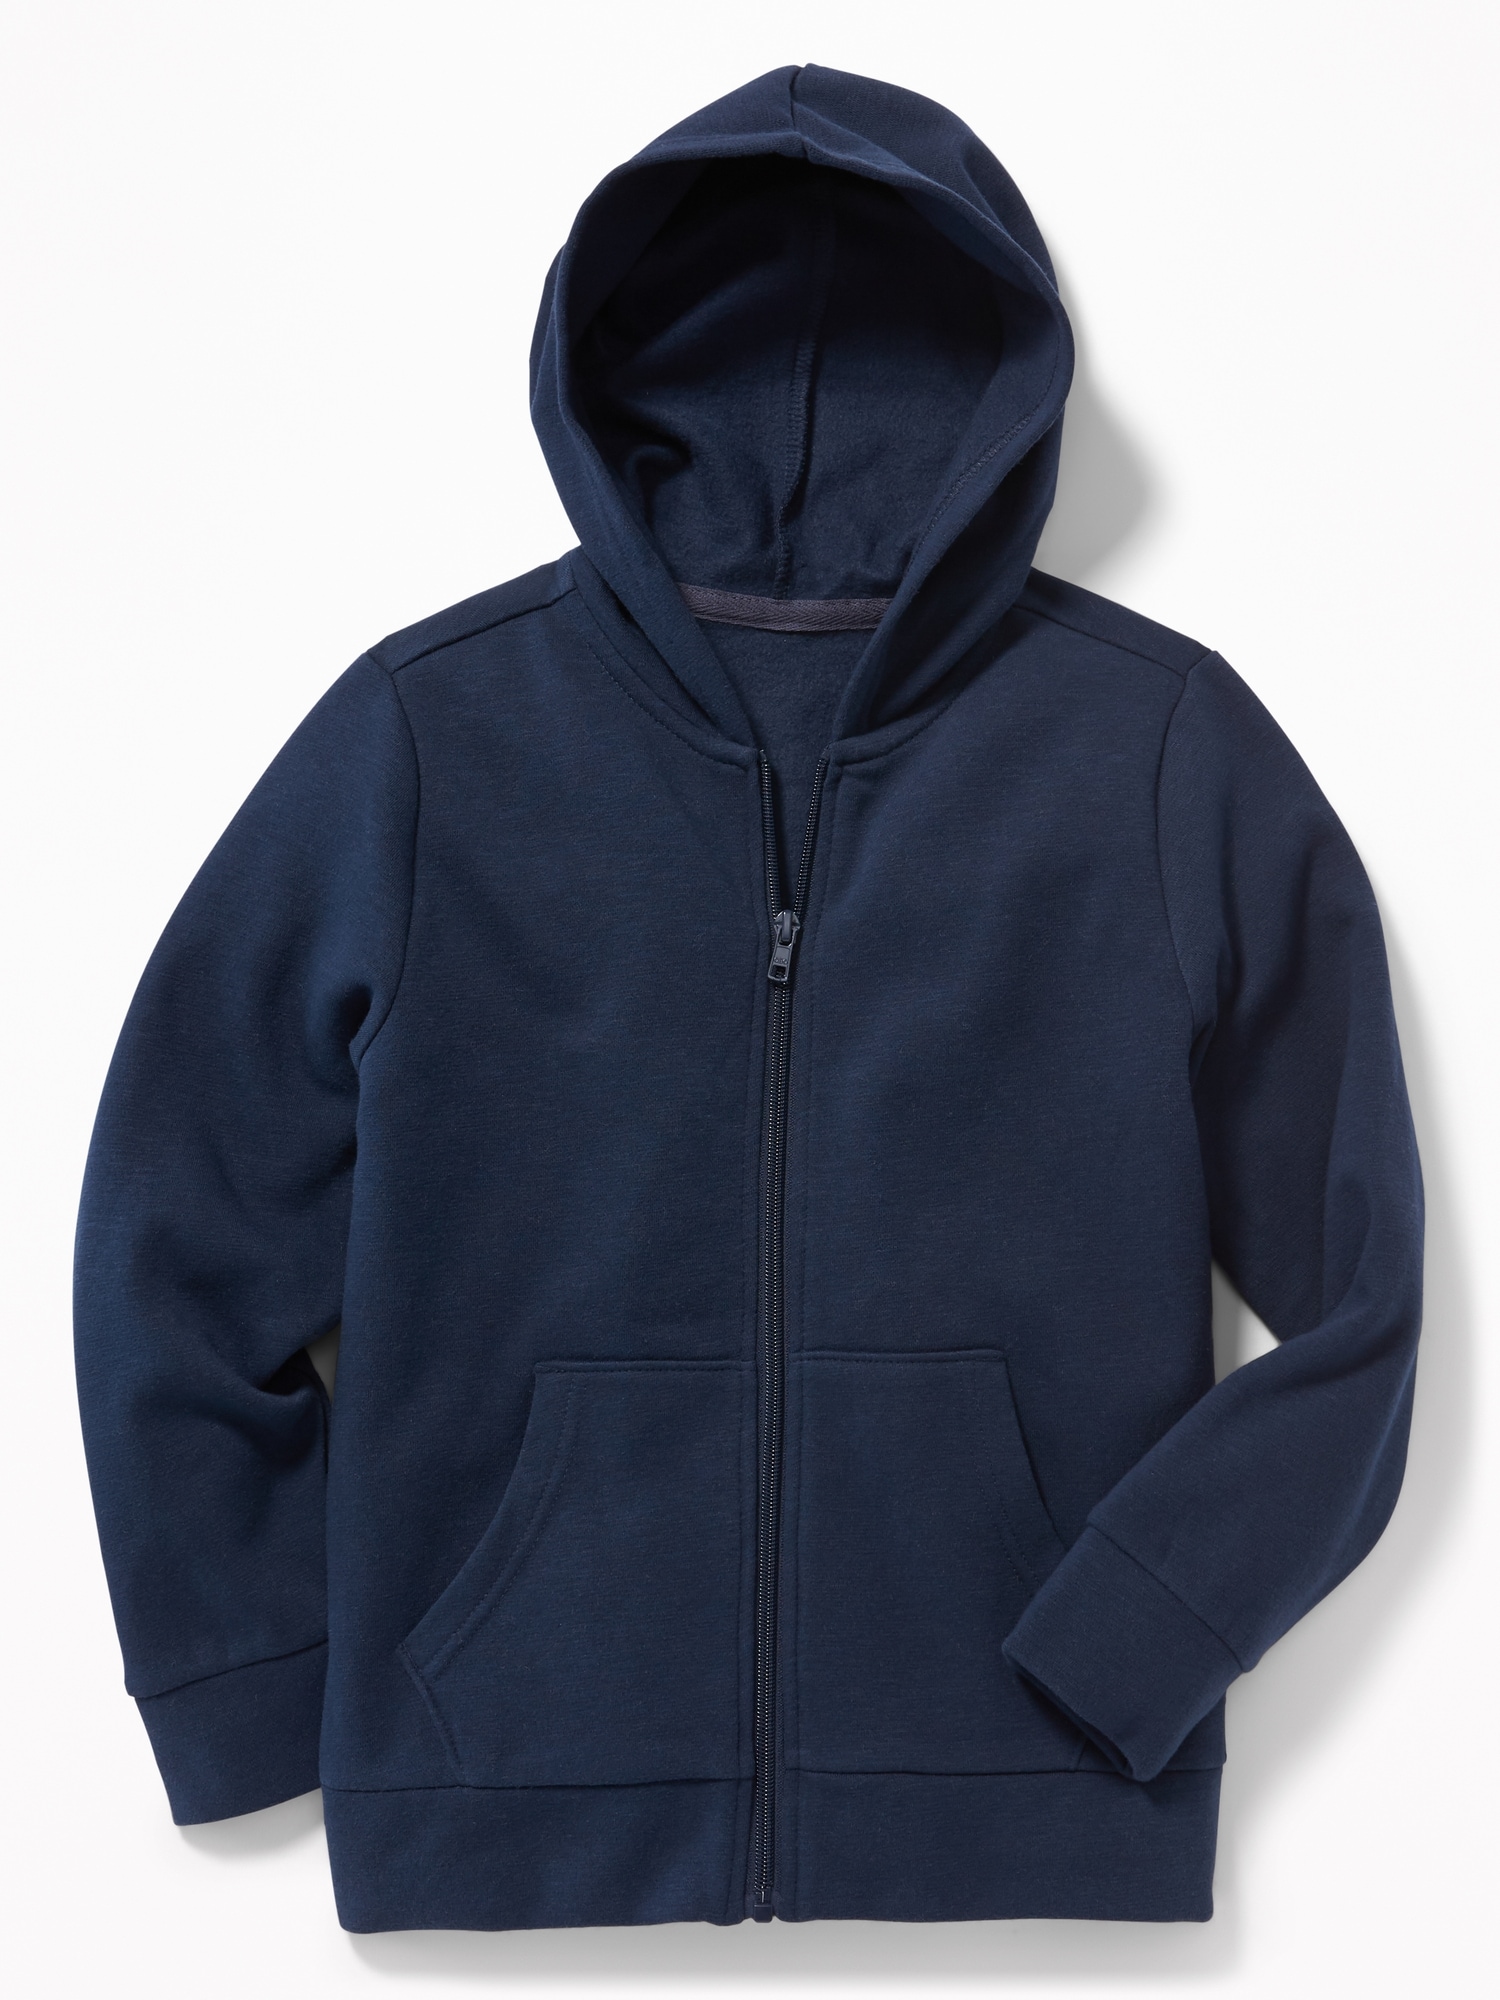 Image result for navy hoodie zip